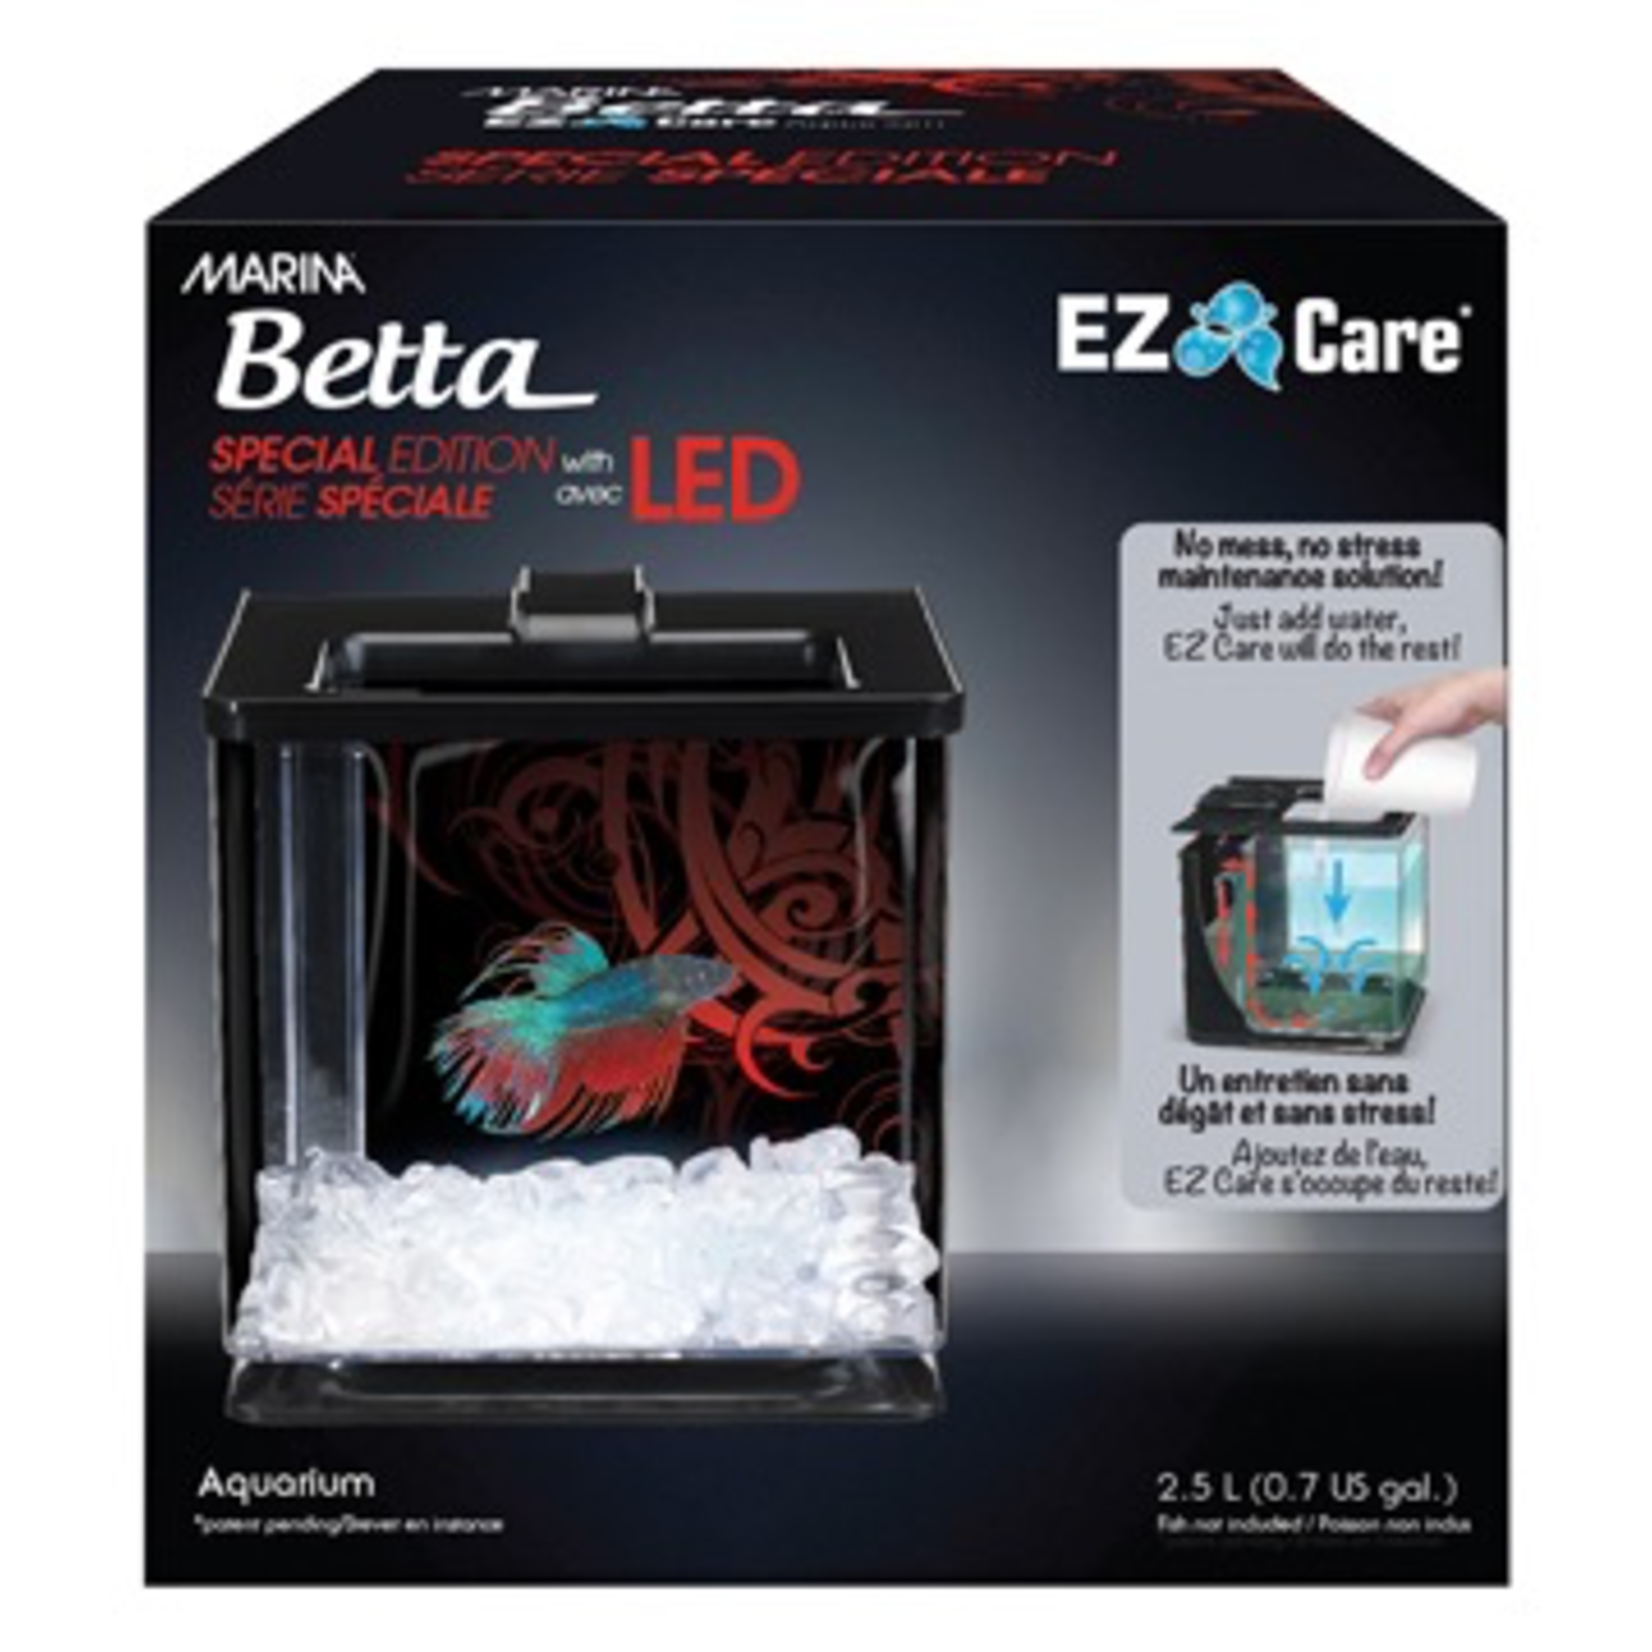 MARINA Marina Betta Special Edition EZ Care Aquarium - Black - 2.5 L (0.7 US Gal)